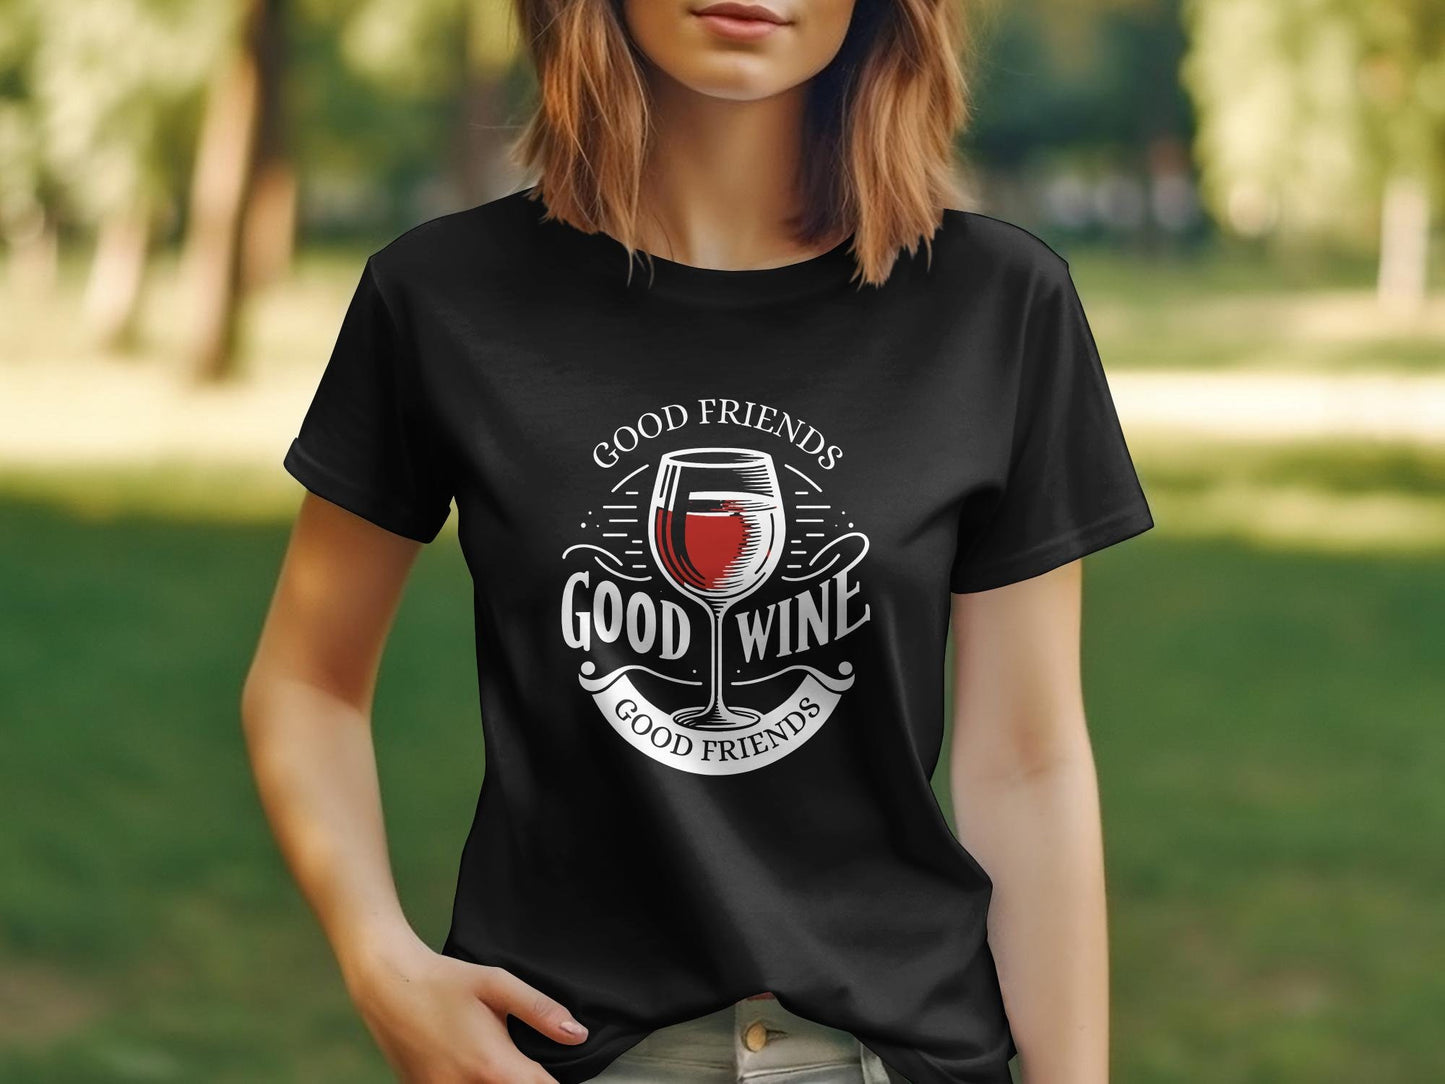 Good Friends Good Wine Good Times Shirt, Drinking Shirt, Weekend Shirt, Vacation Shirt, Cute Tshirt, Tshirt for Women, Mom Shirt